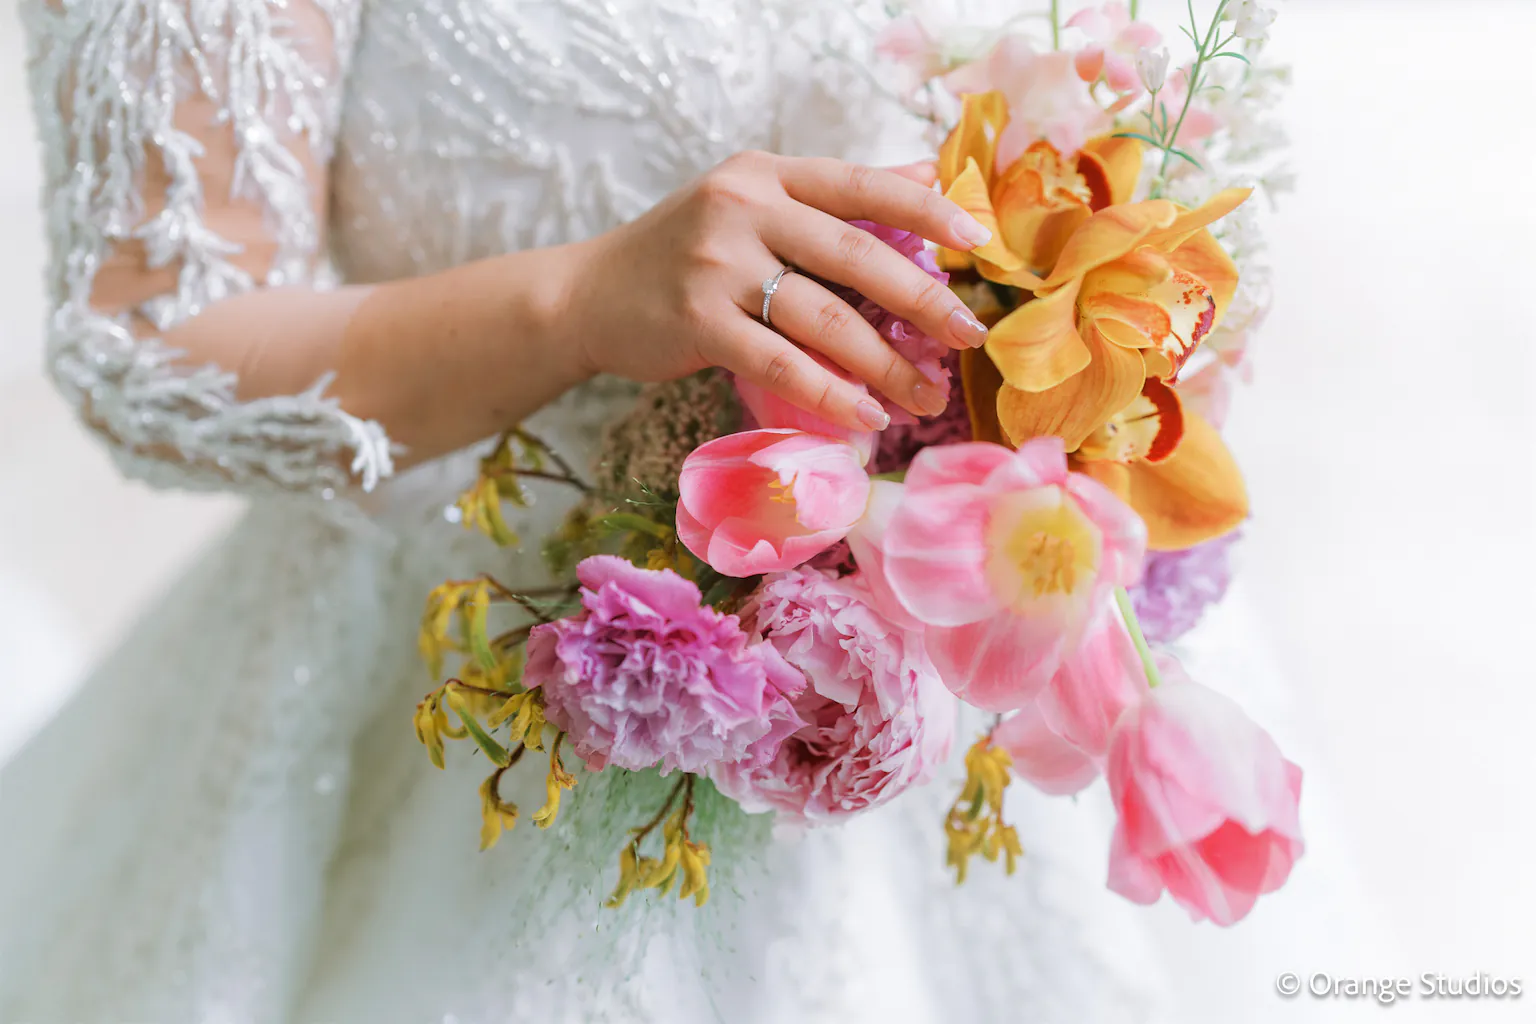 khim cruz floral bridal bouquet for michelle wedding